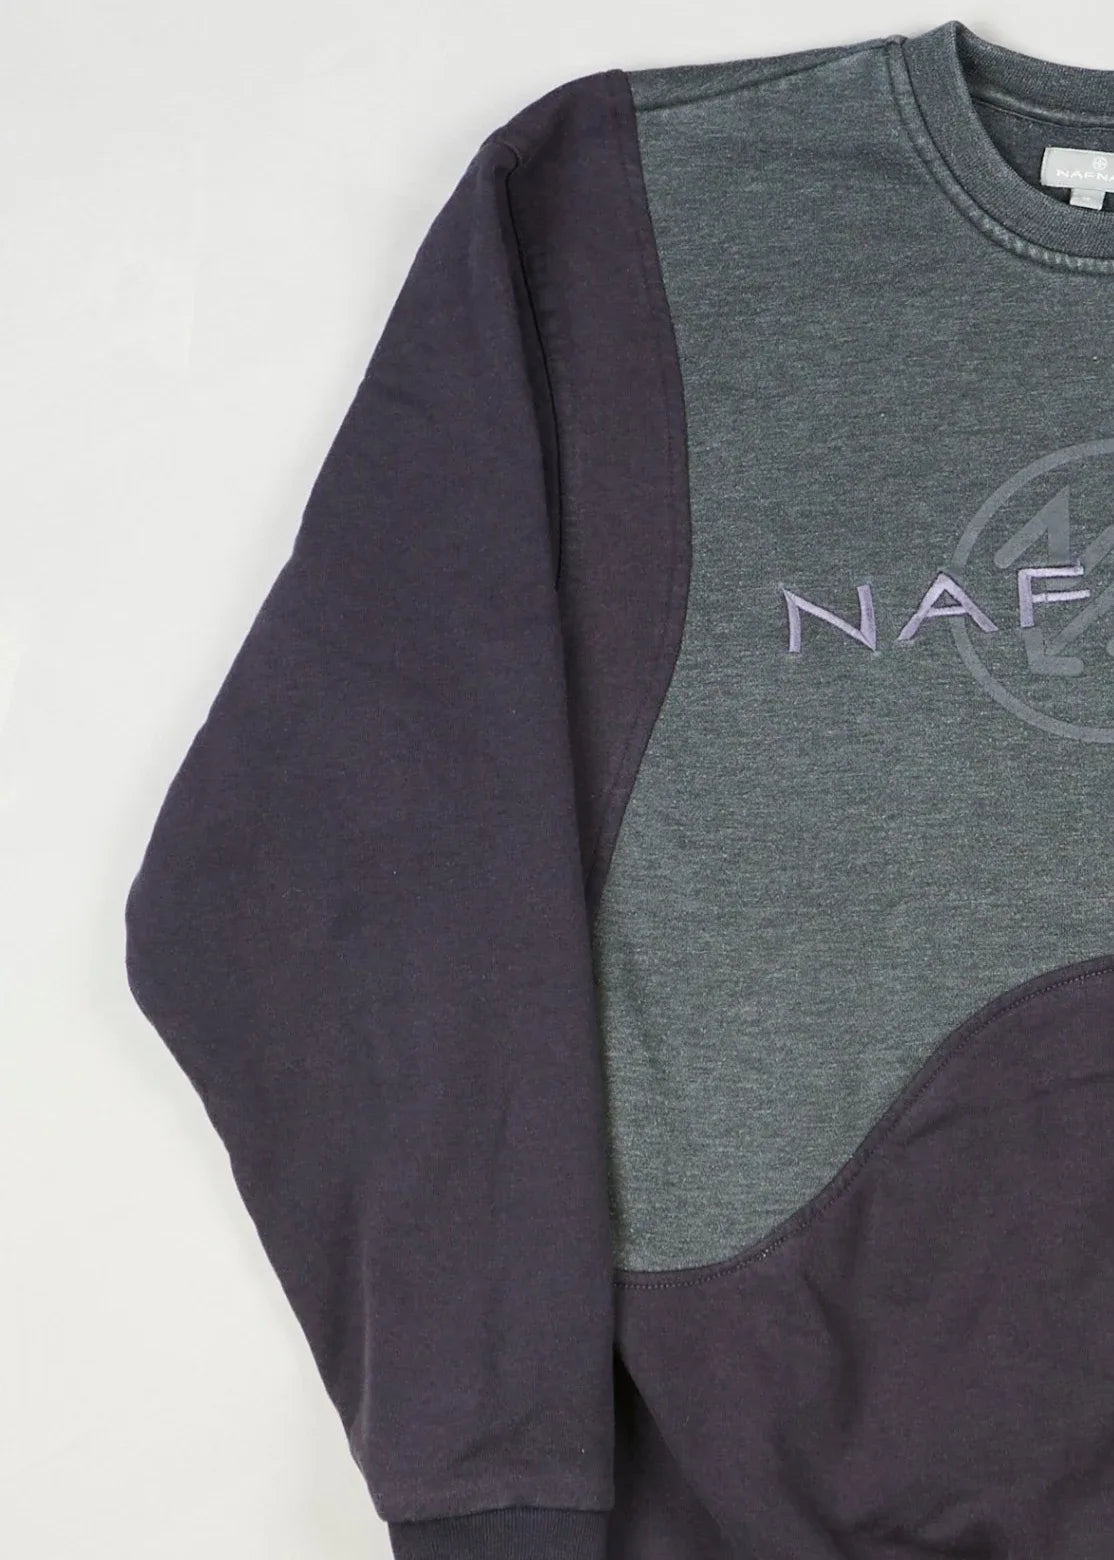 NAFNAF - Sweatshirt (M) Left